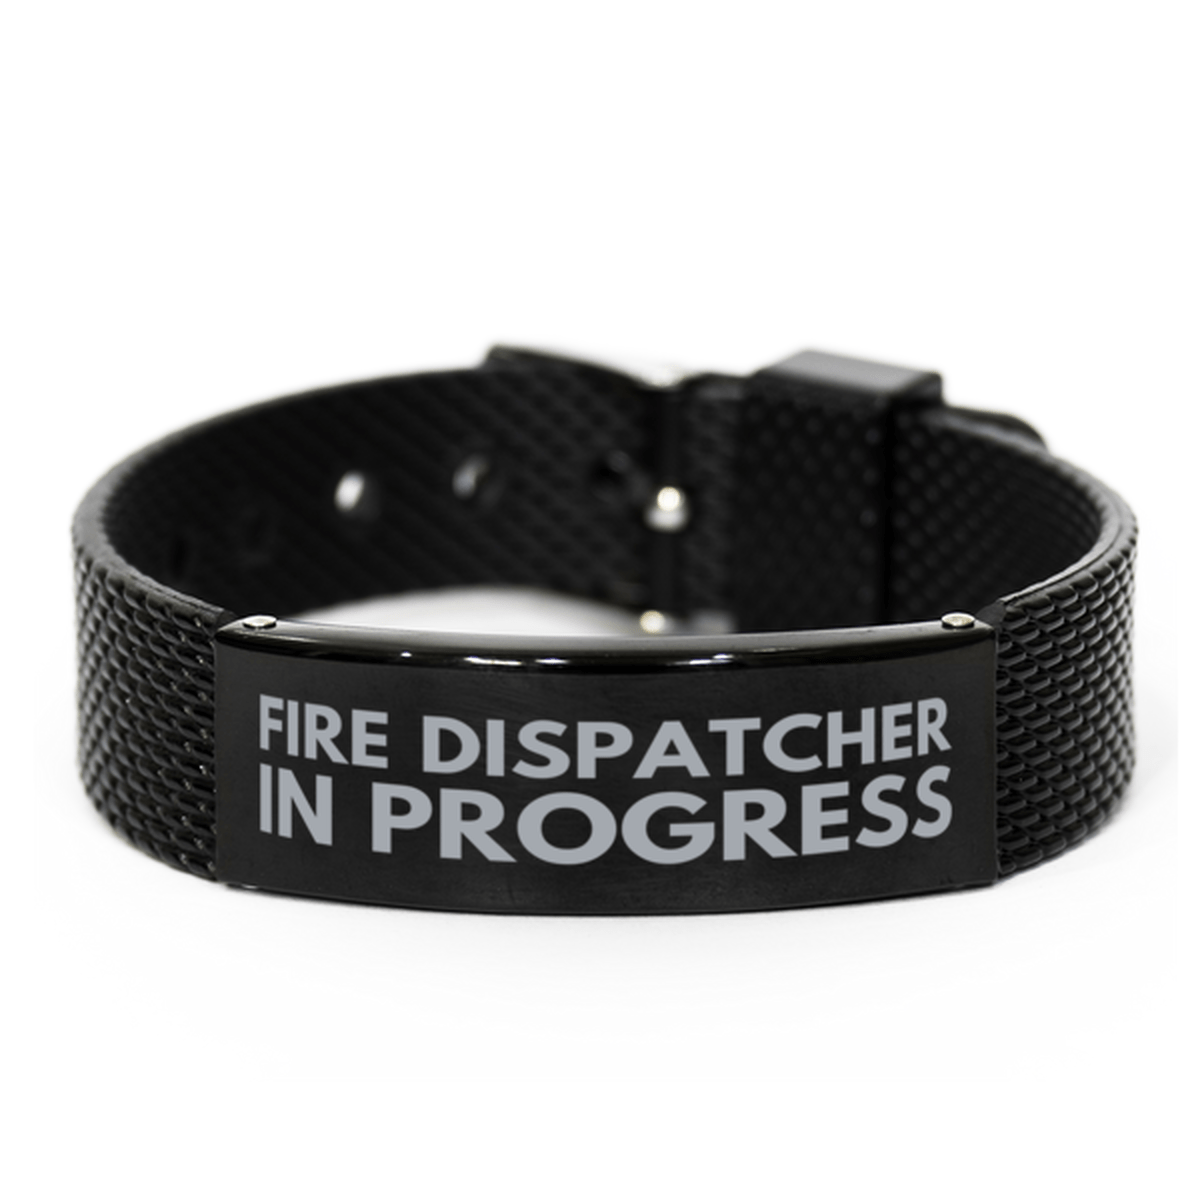 Inspirational Fire Dispatcher Black Shark Mesh Bracelet, Fire Dispatcher In Progress, Best Graduation Gifts for Students